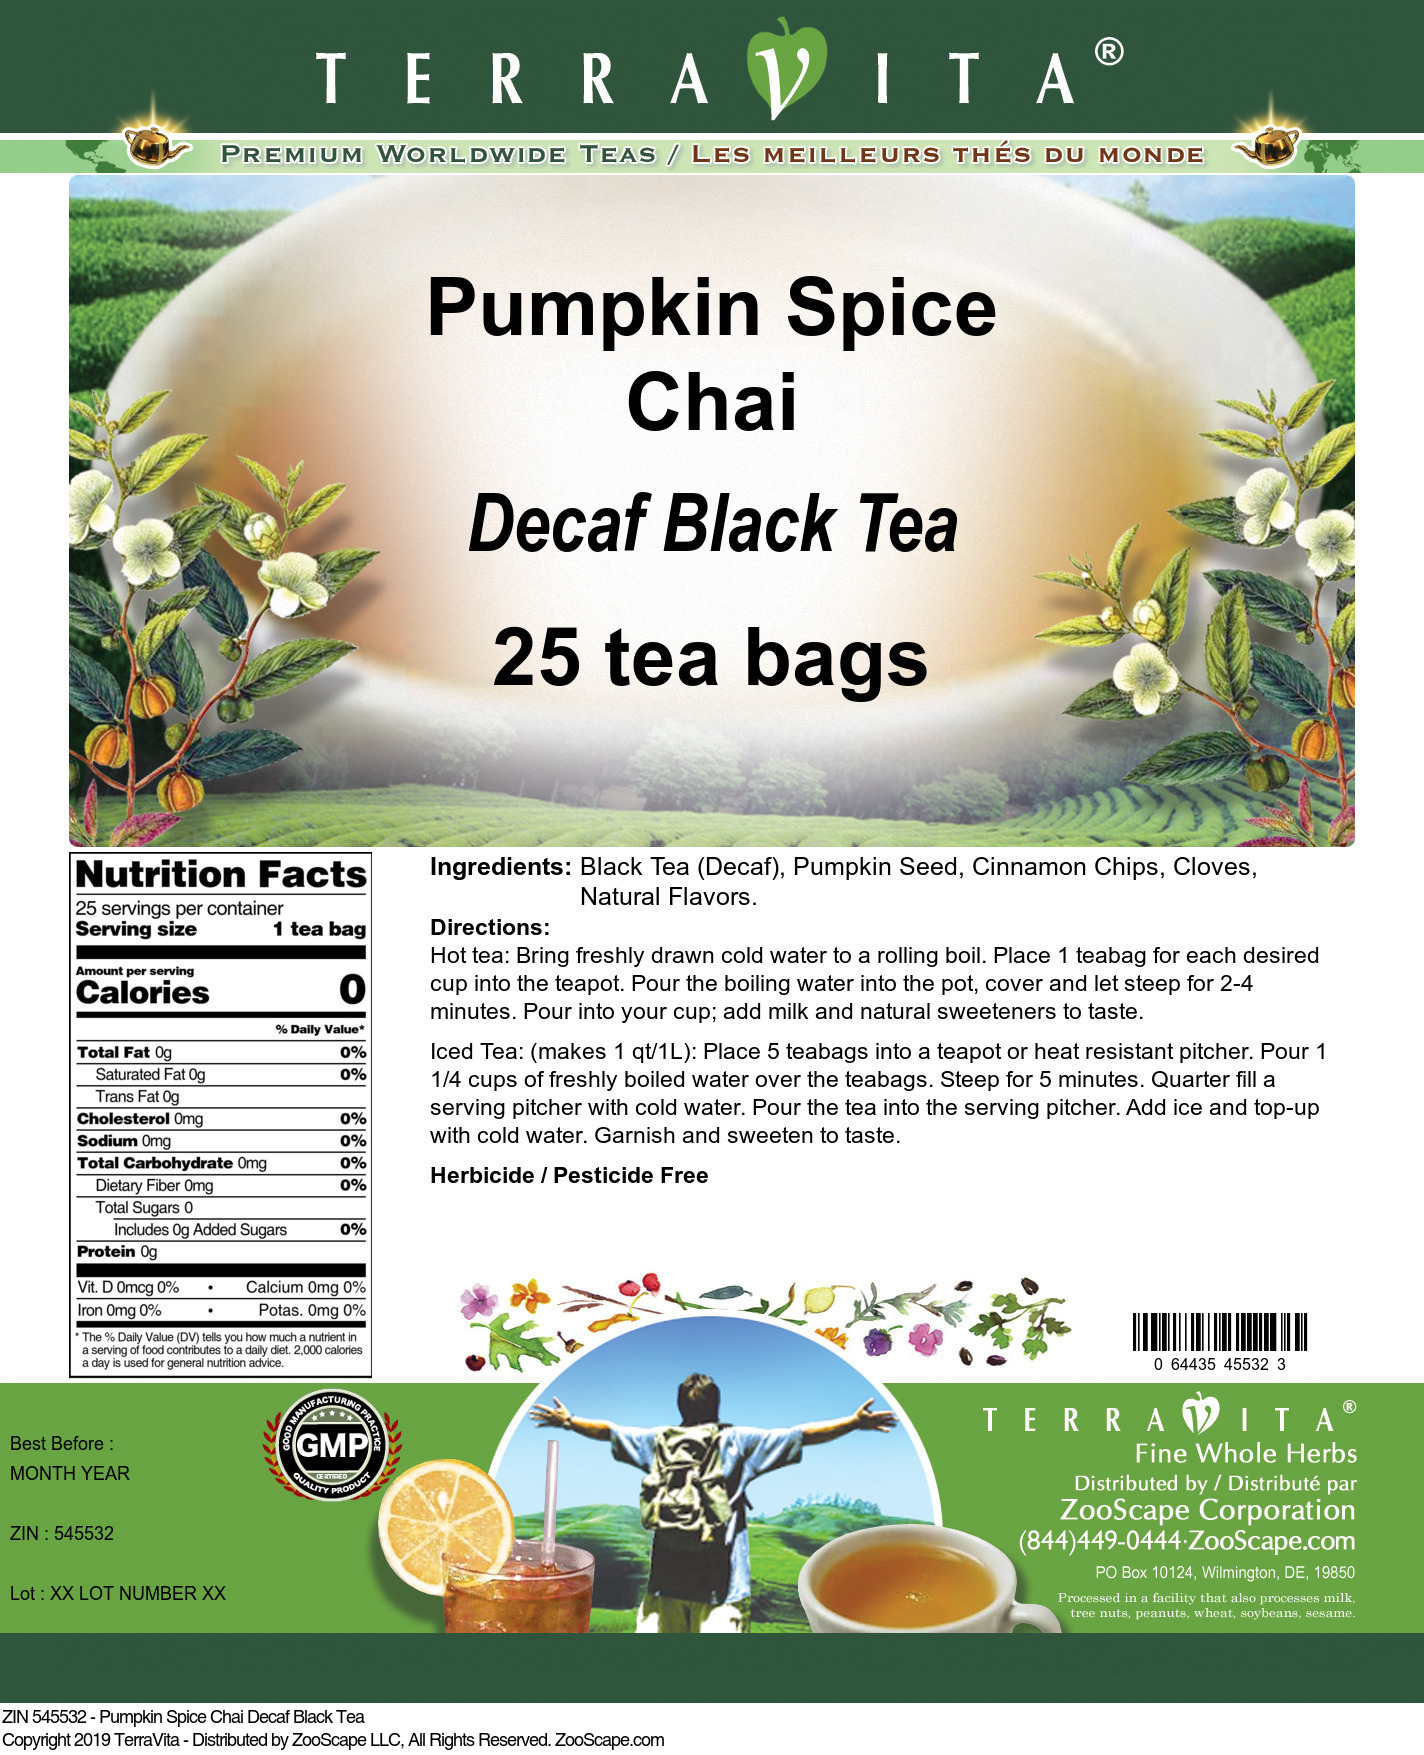 Pumpkin Spice Chai Decaf Black Tea - Label